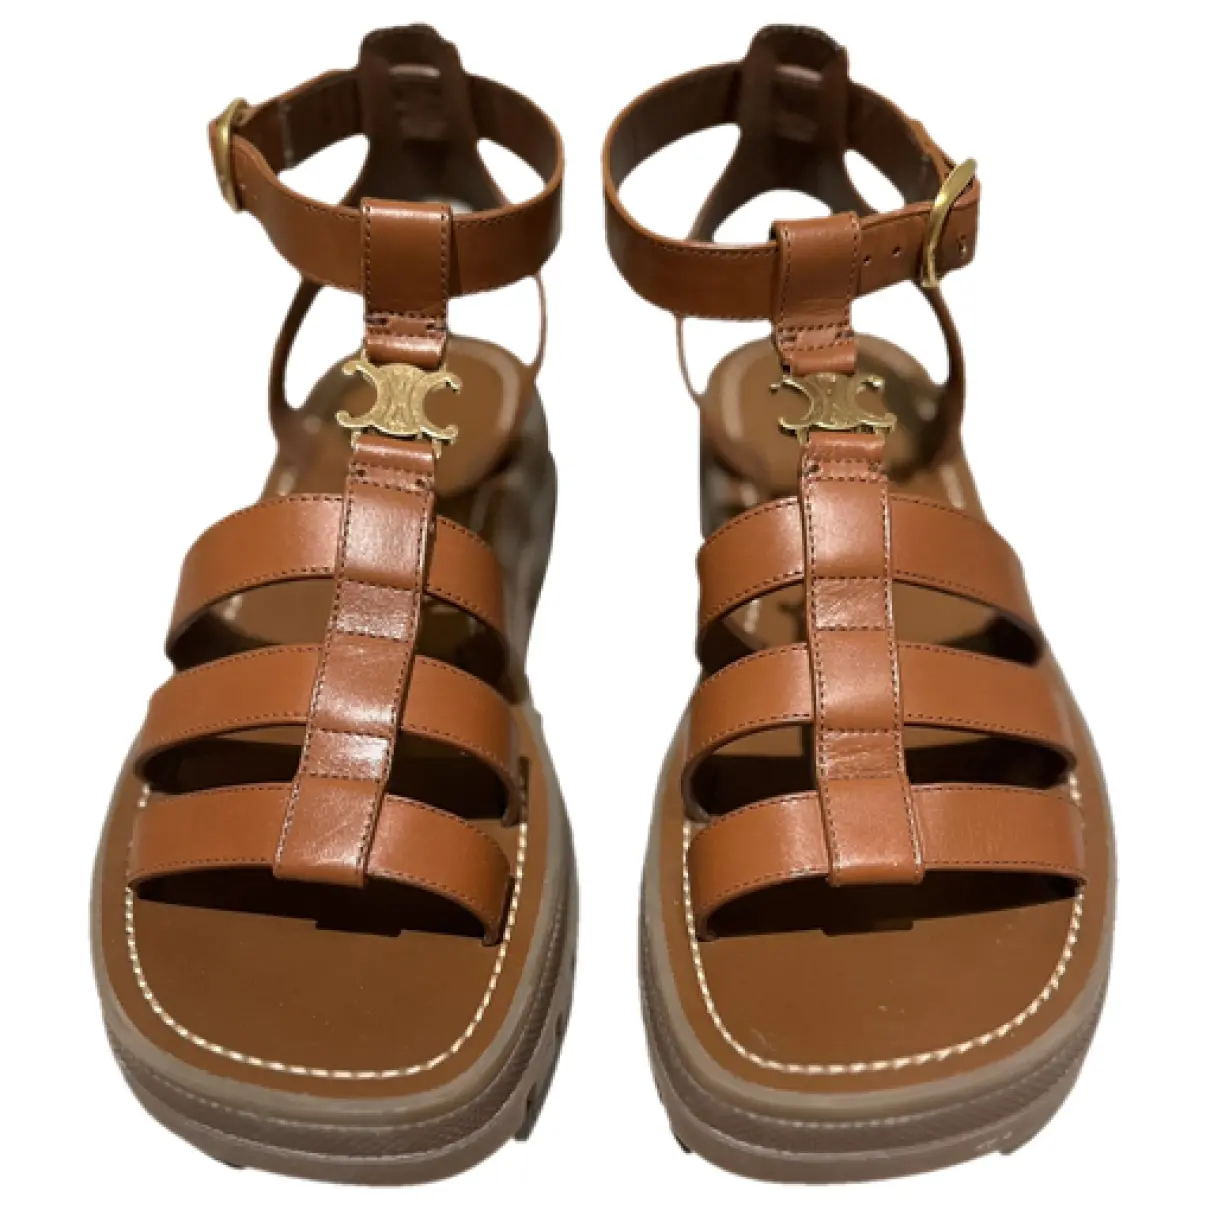 Clea leather sandal